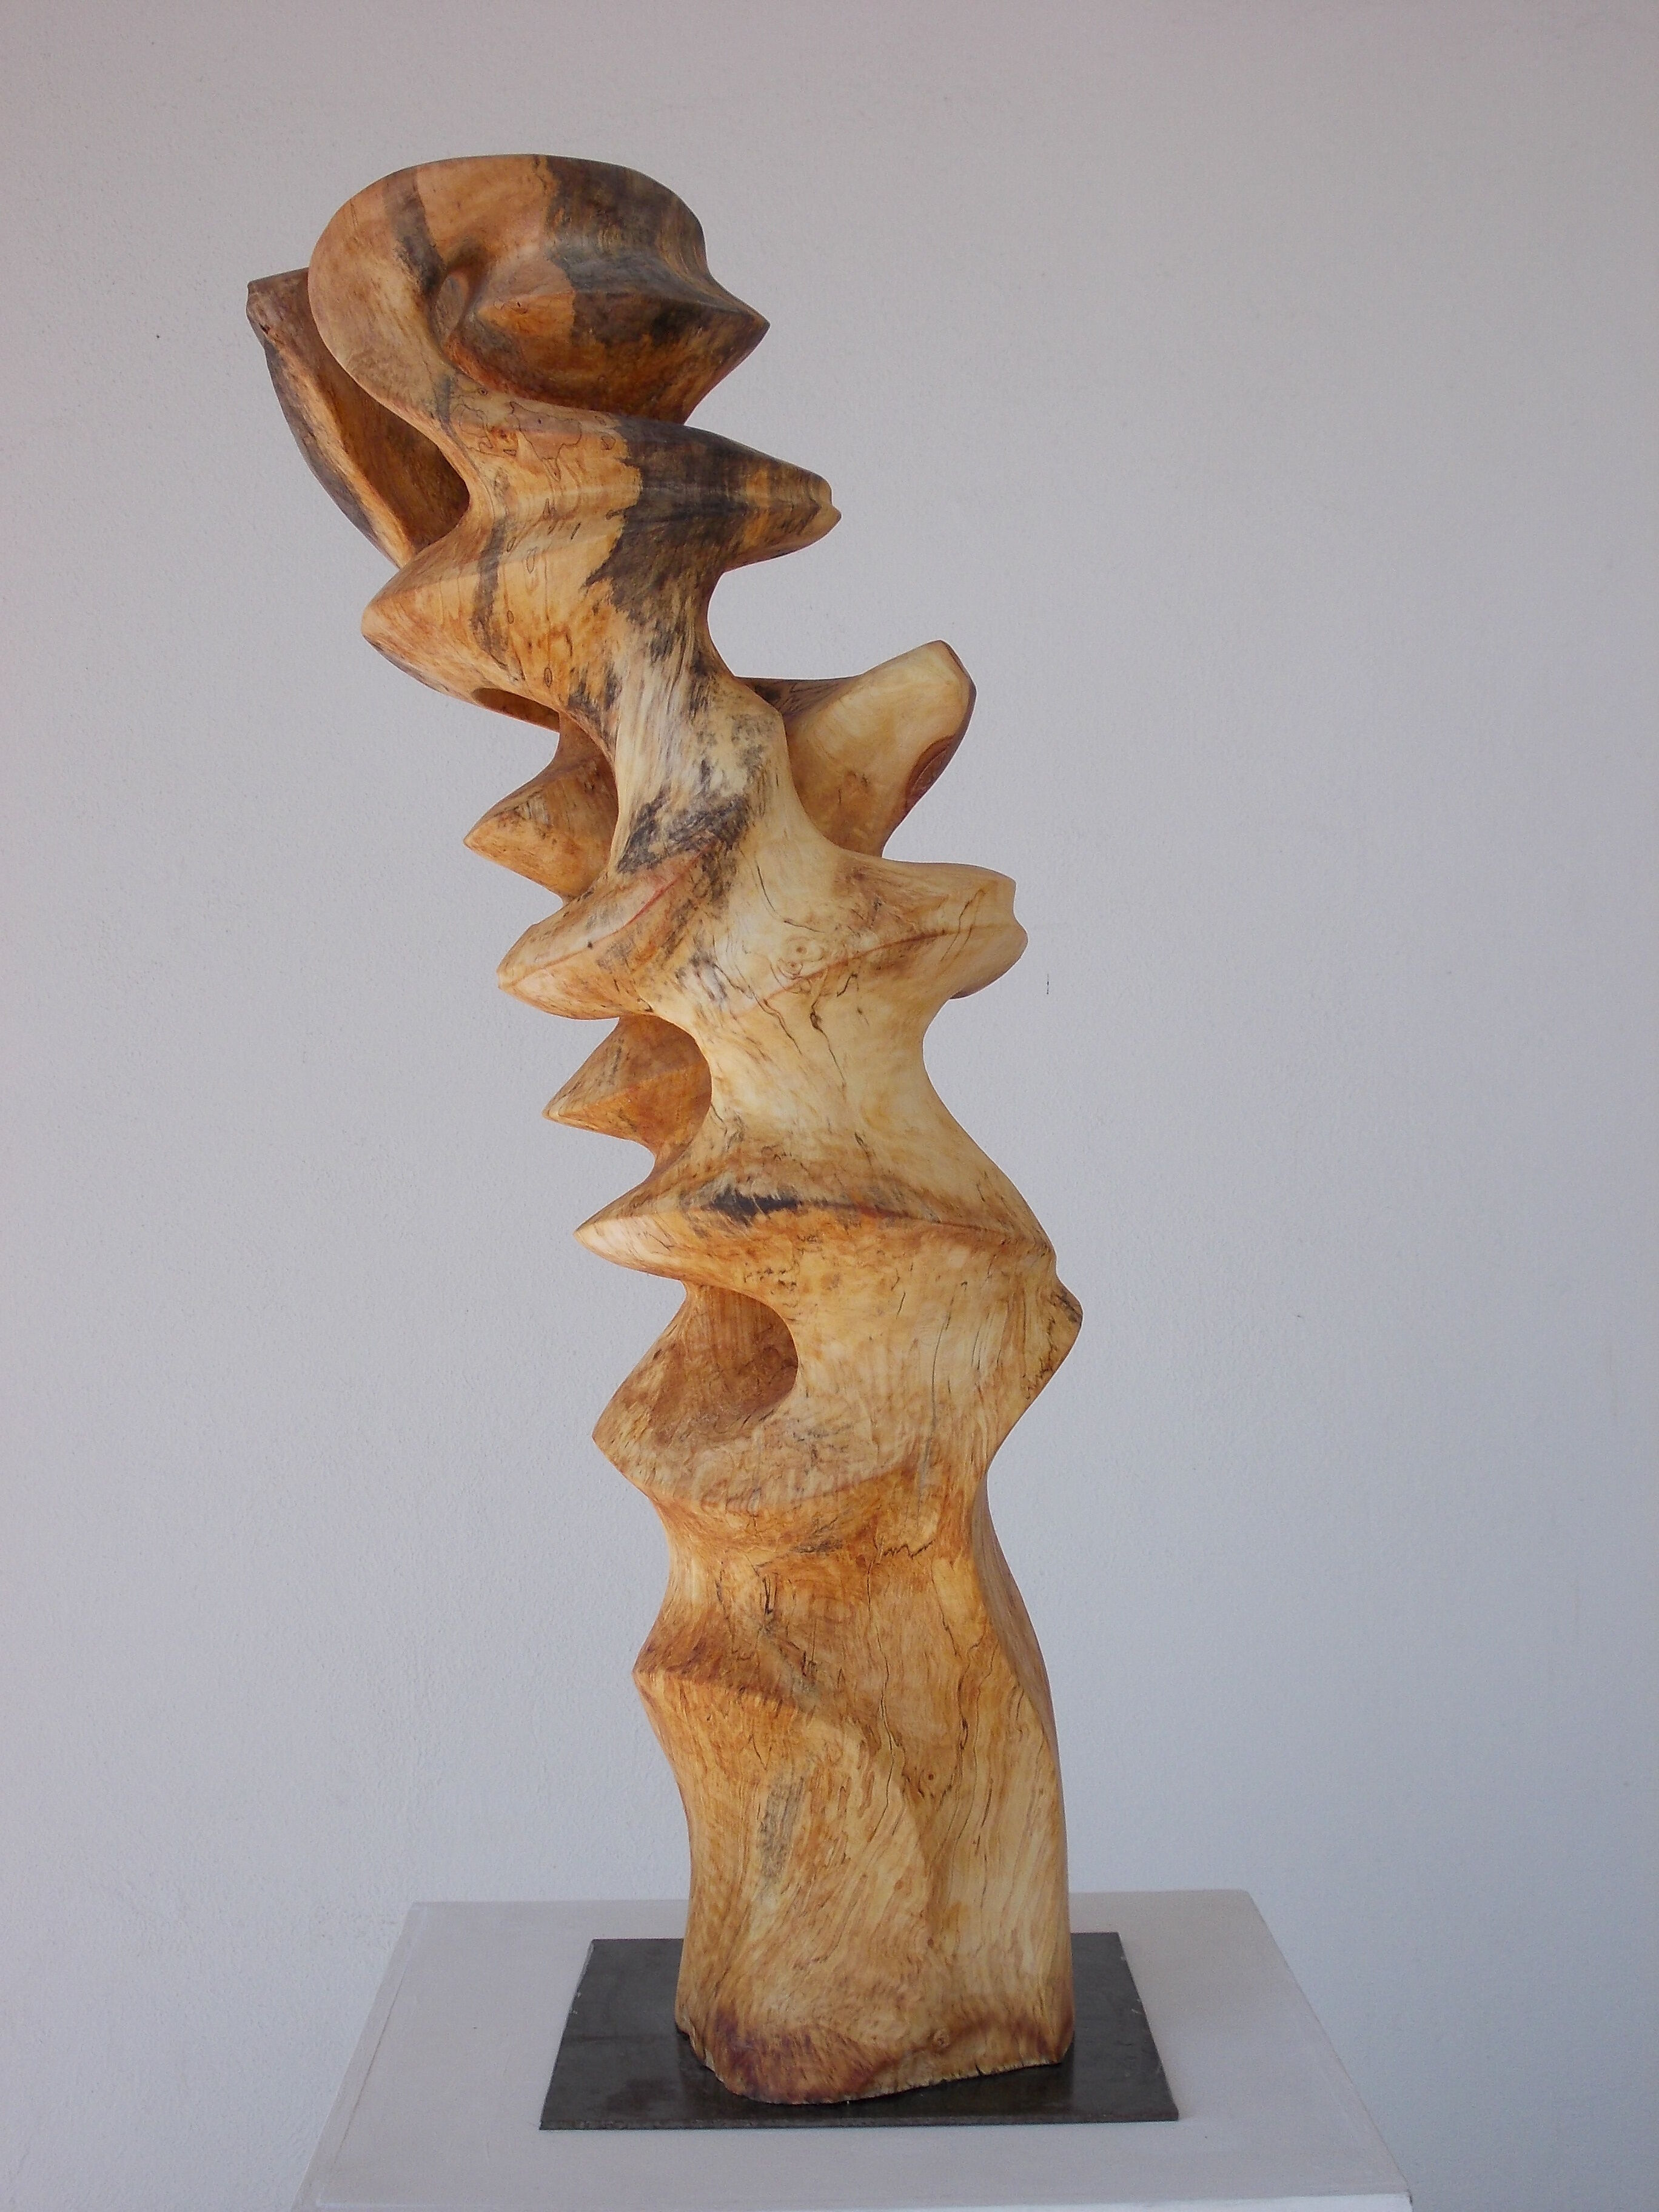 Sculpture "Chestnut King" (2016)